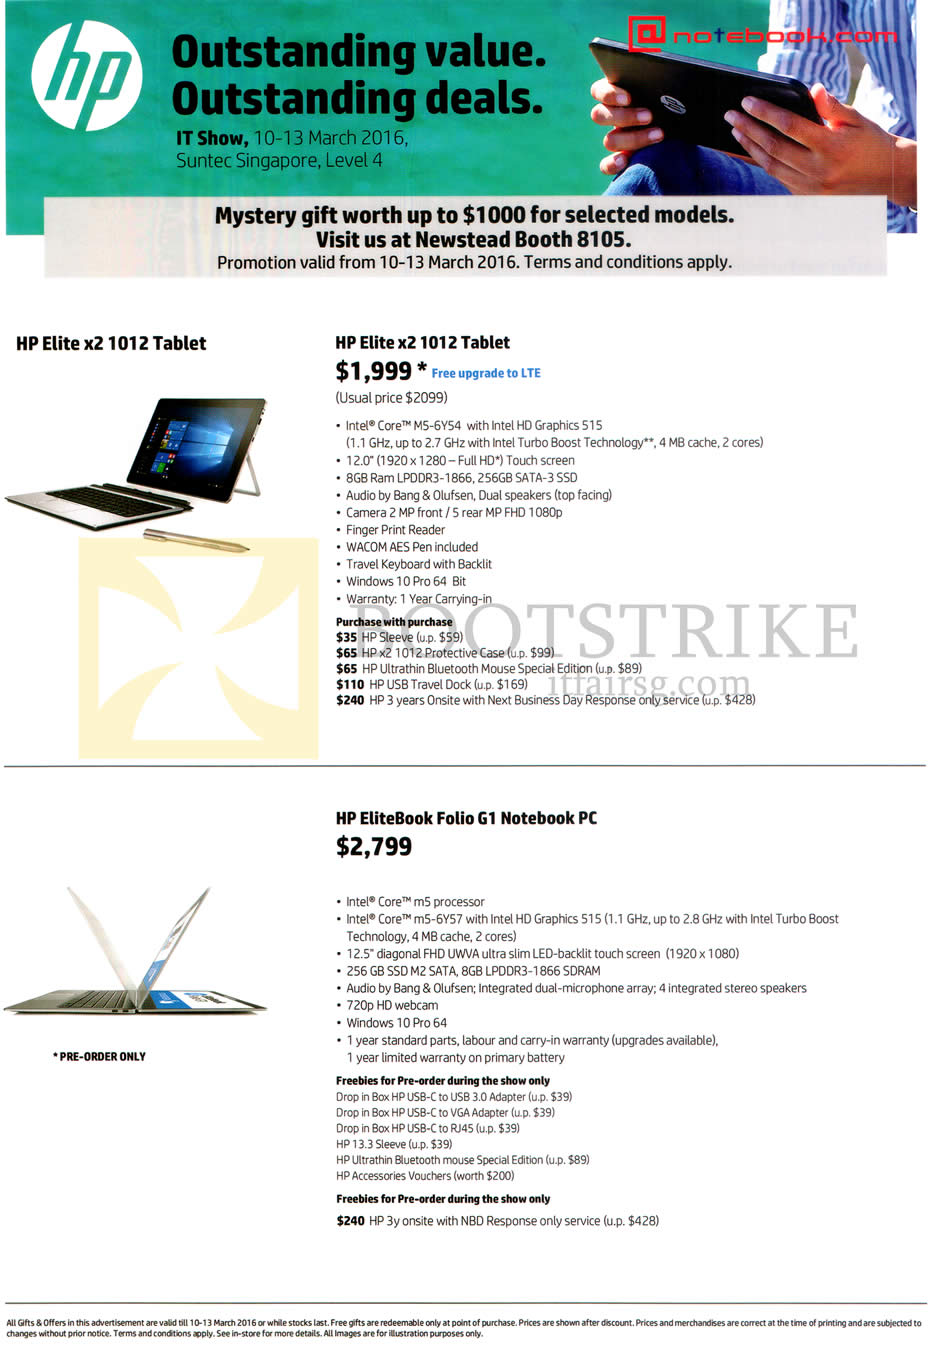 IT SHOW 2016 price list image brochure of HP Notebook.com Notebooks Elite X2 1012, Elitebook Folio G1